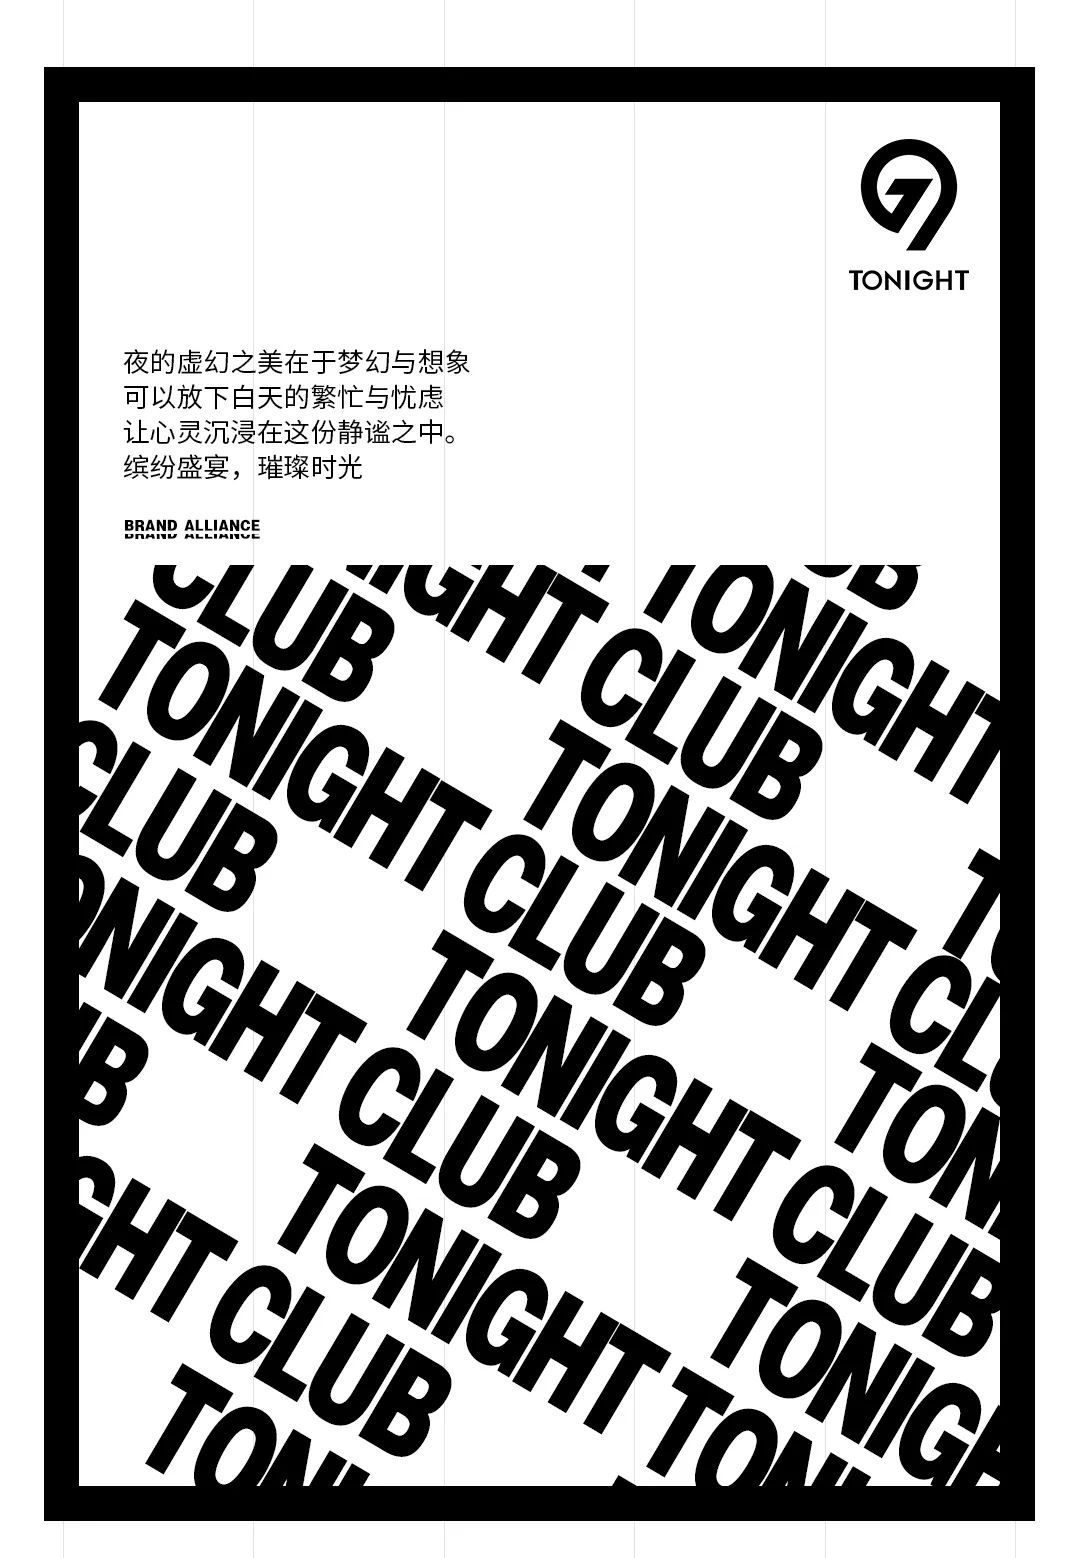 TONIGHT | 异业联盟/包场/年会全面启动-杭州T9酒吧/TONIGHT Club